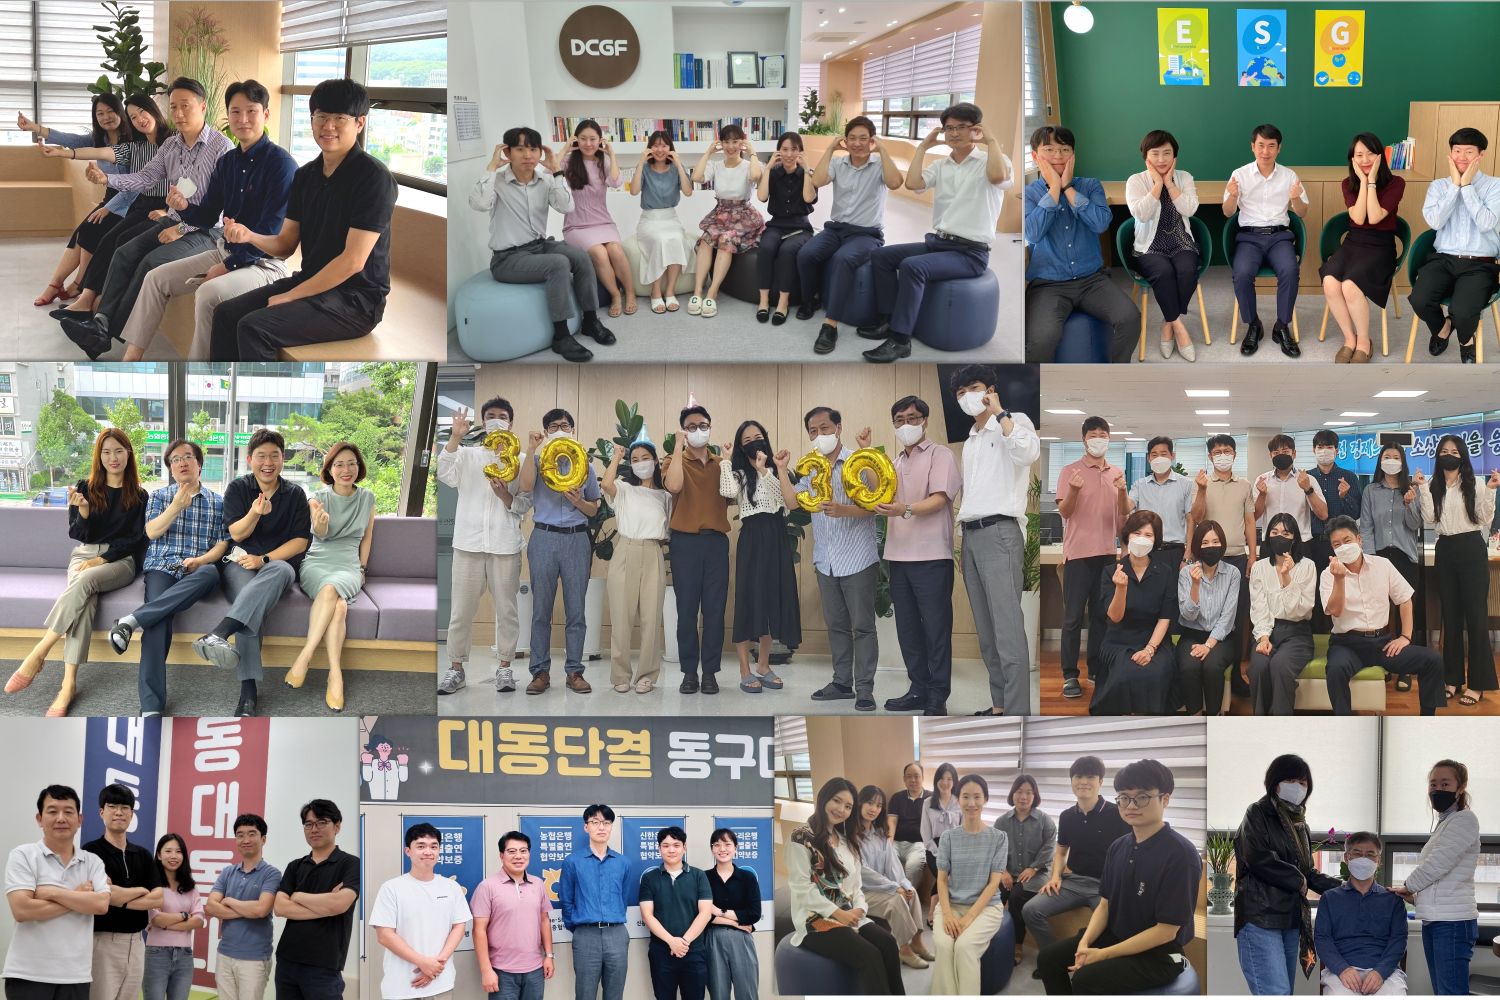 Daejeon Credit Guarantee Foundation